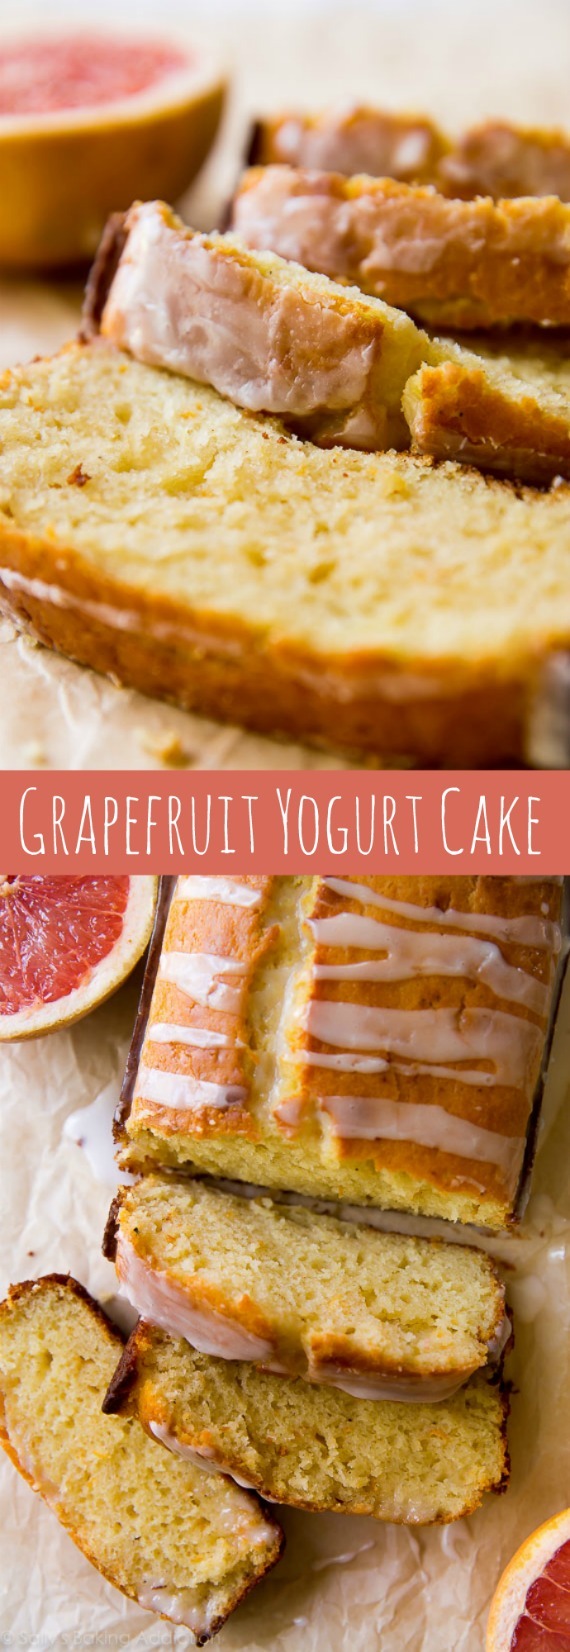 Sallys-baking-addiction-grapefruit-yogurt-cake